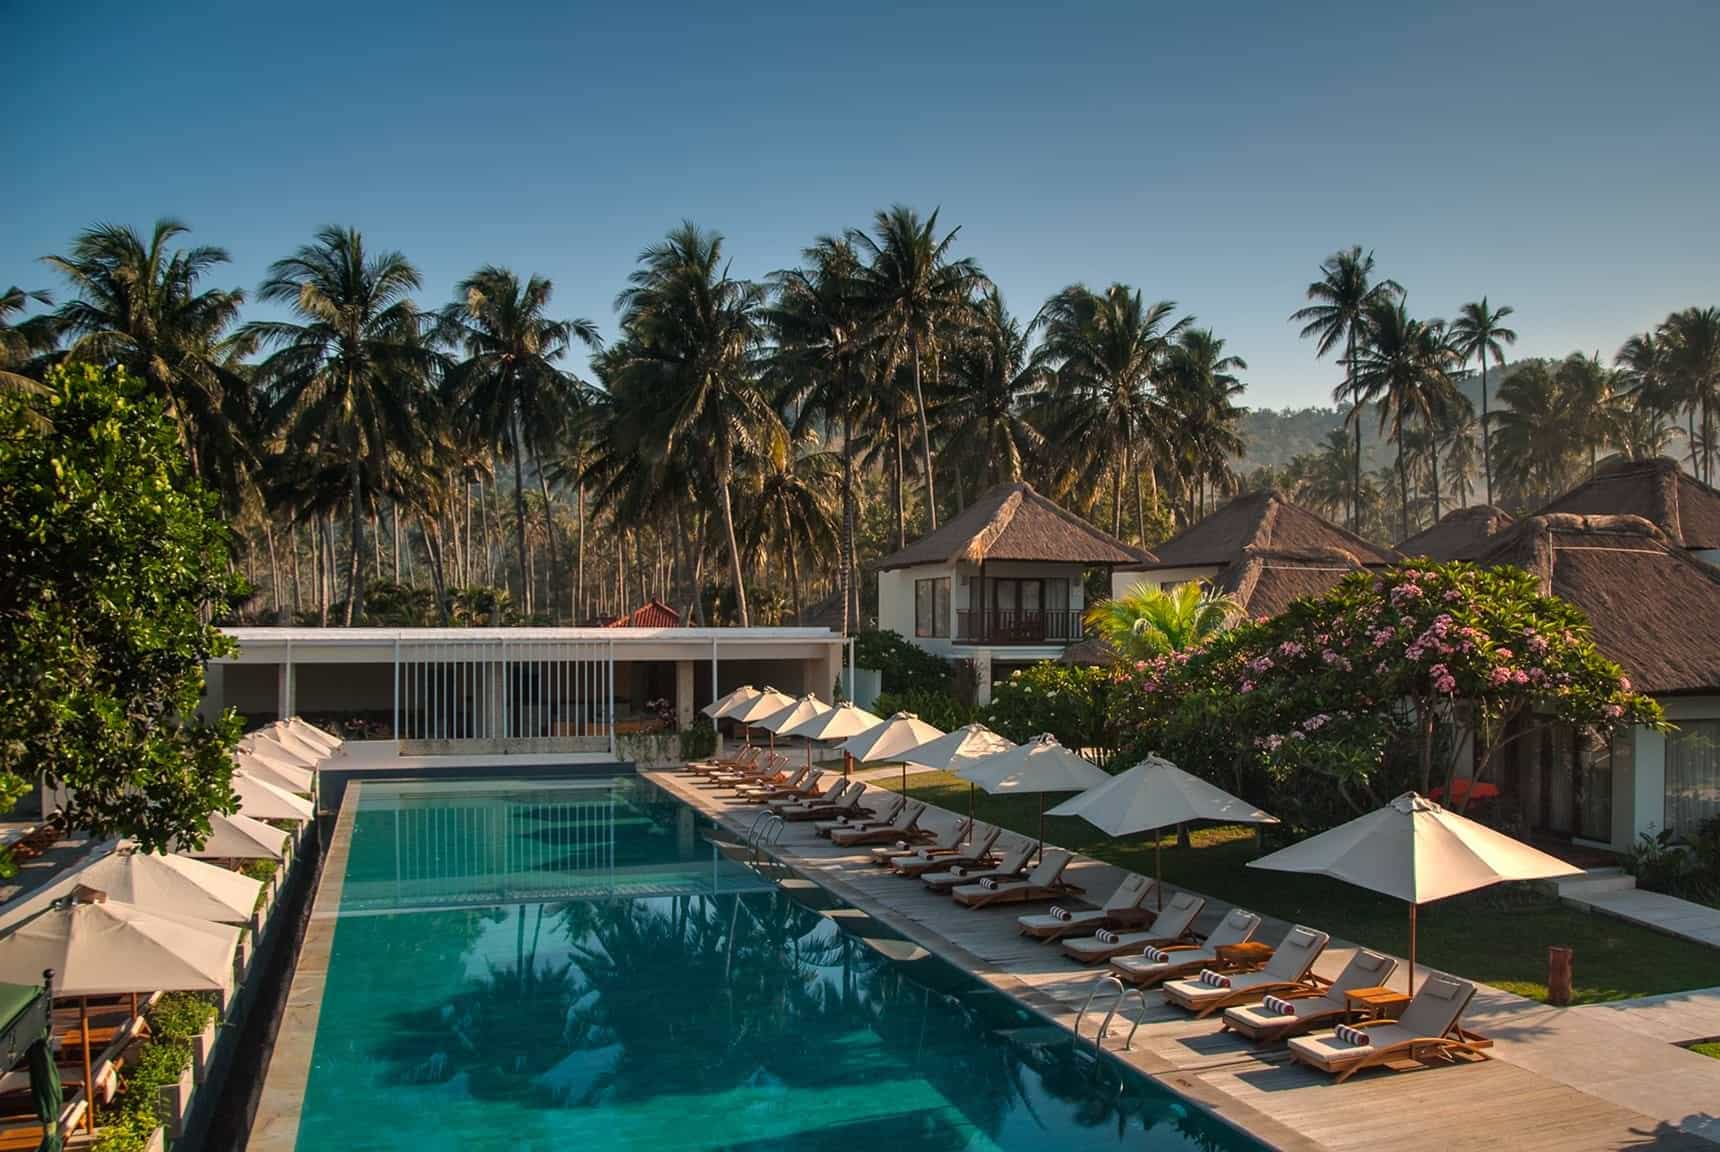 Living Asia - Mangsit, Lombok Indonesia (Bali hotel photography by master photographer Rick Carmichael of LuxViz)